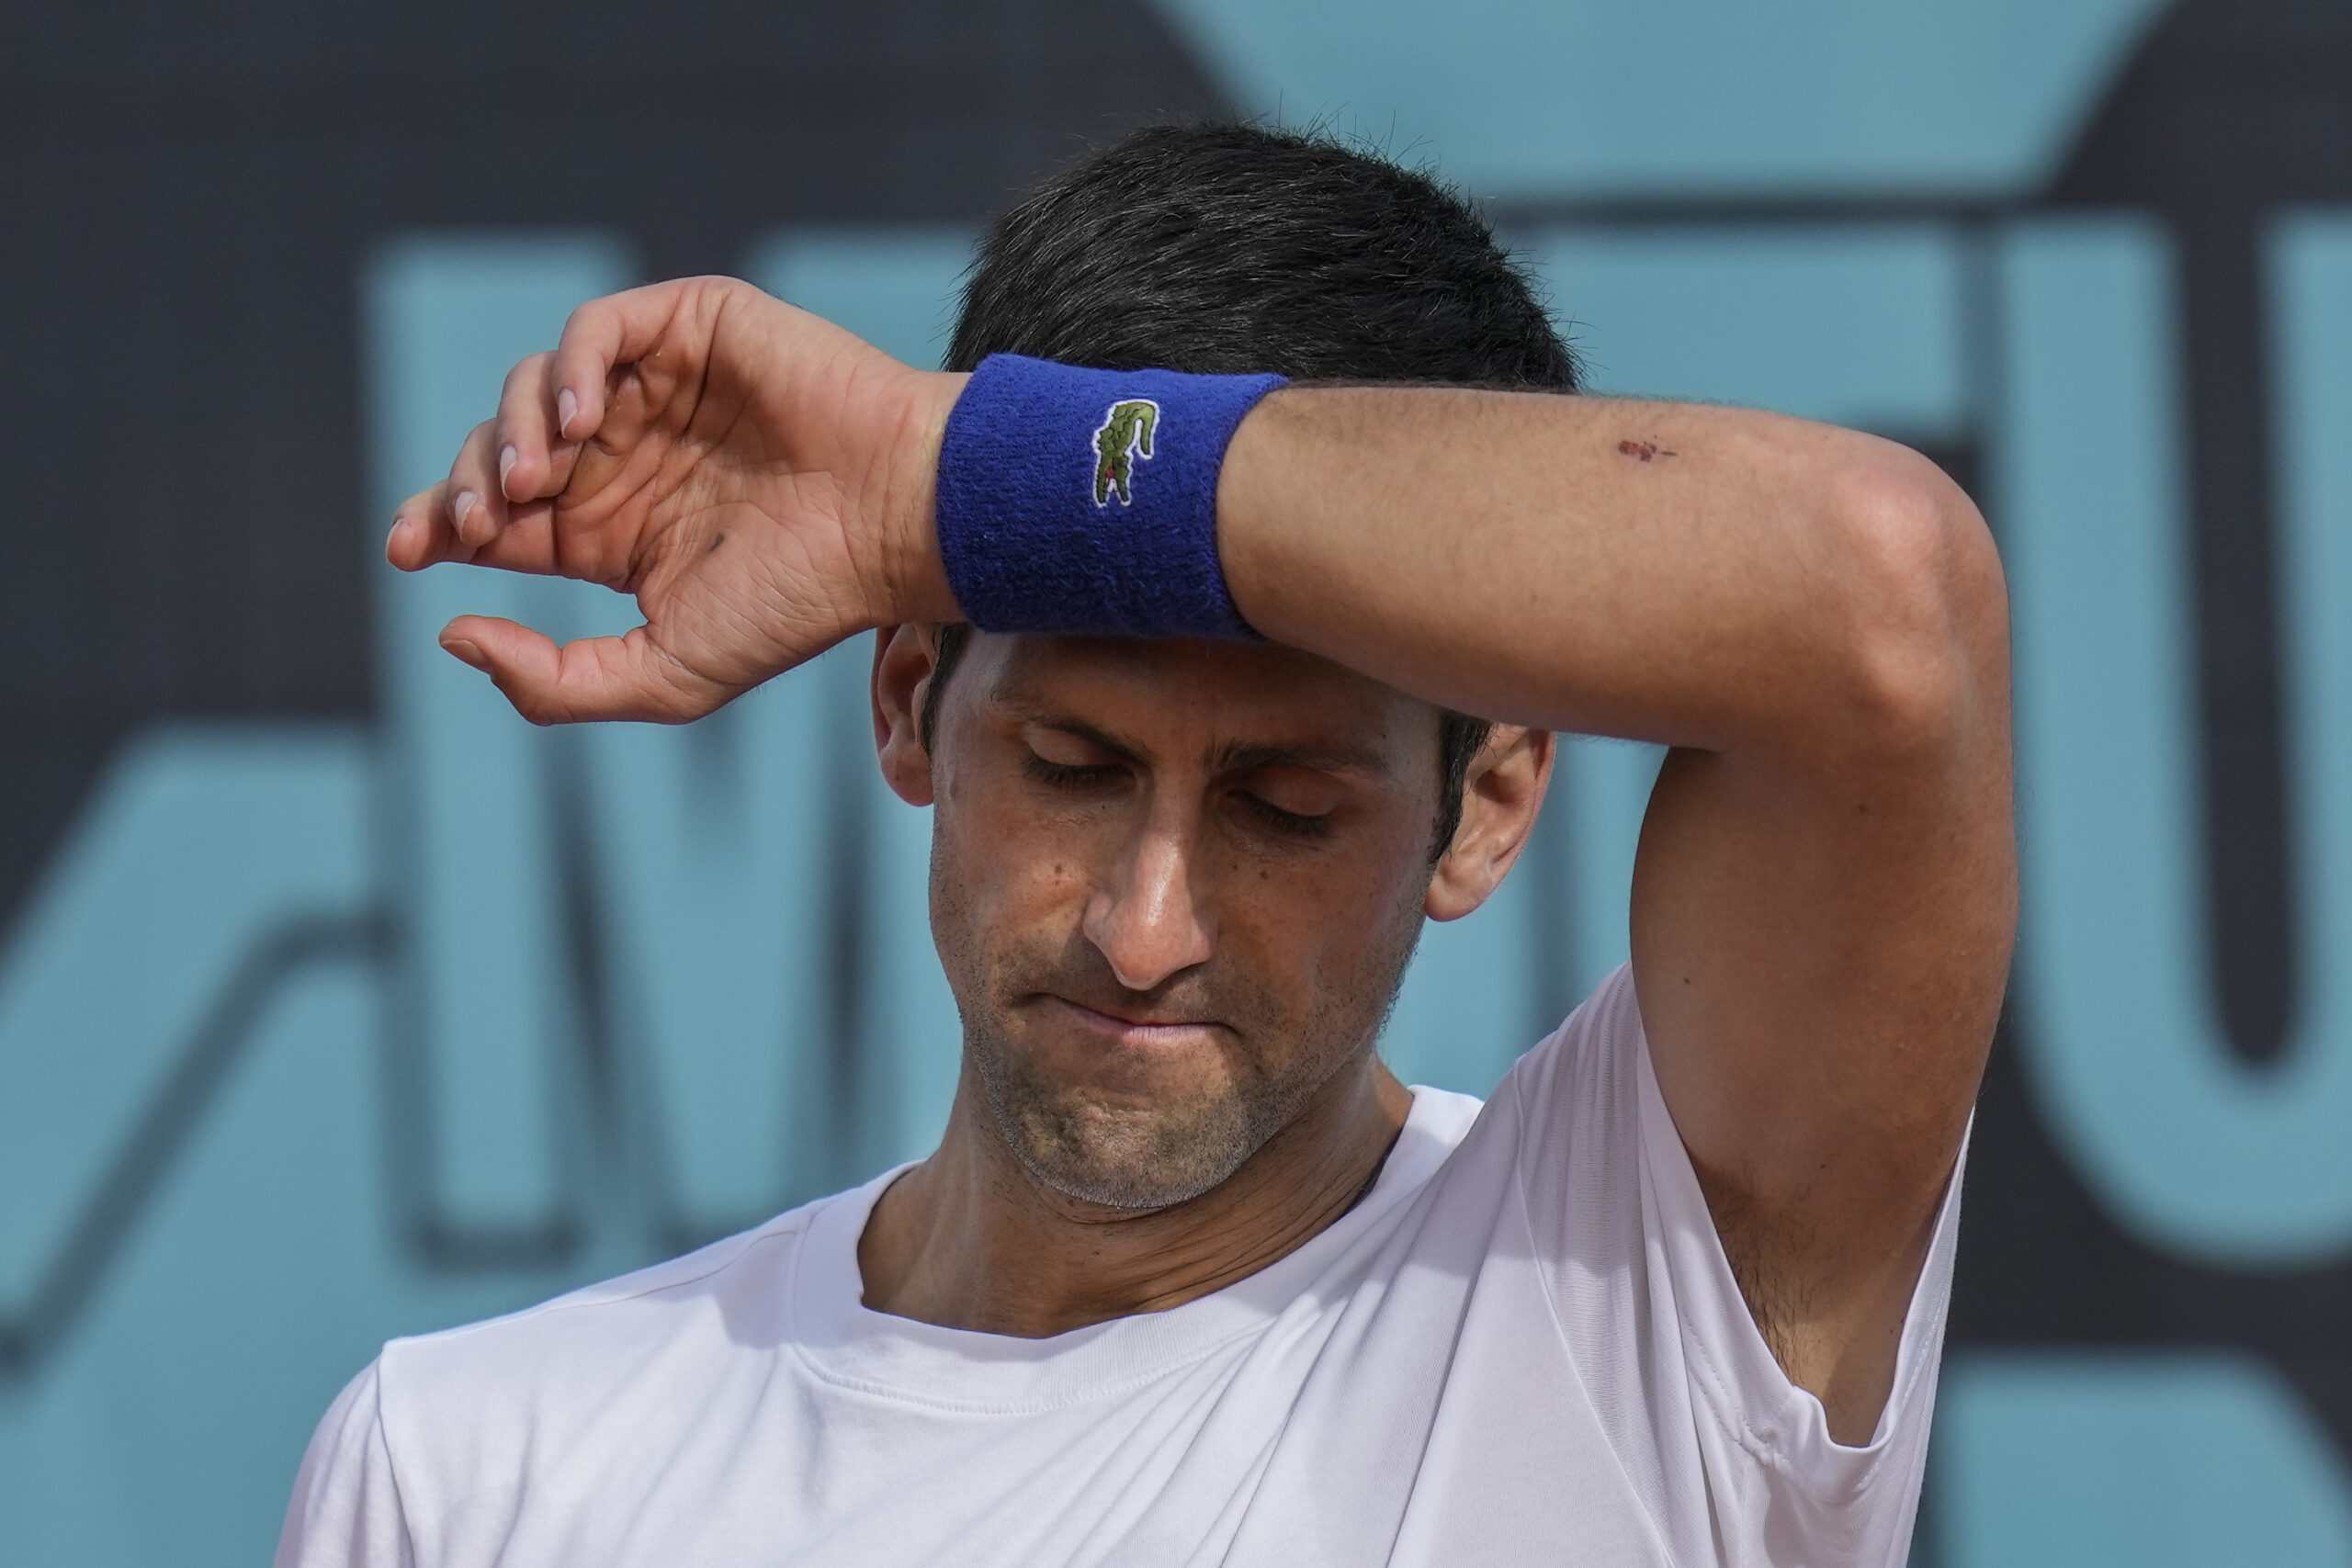 ‘Fingers crossed’: Novak Djokovic hopes he might play in US Open - Washington Examiner